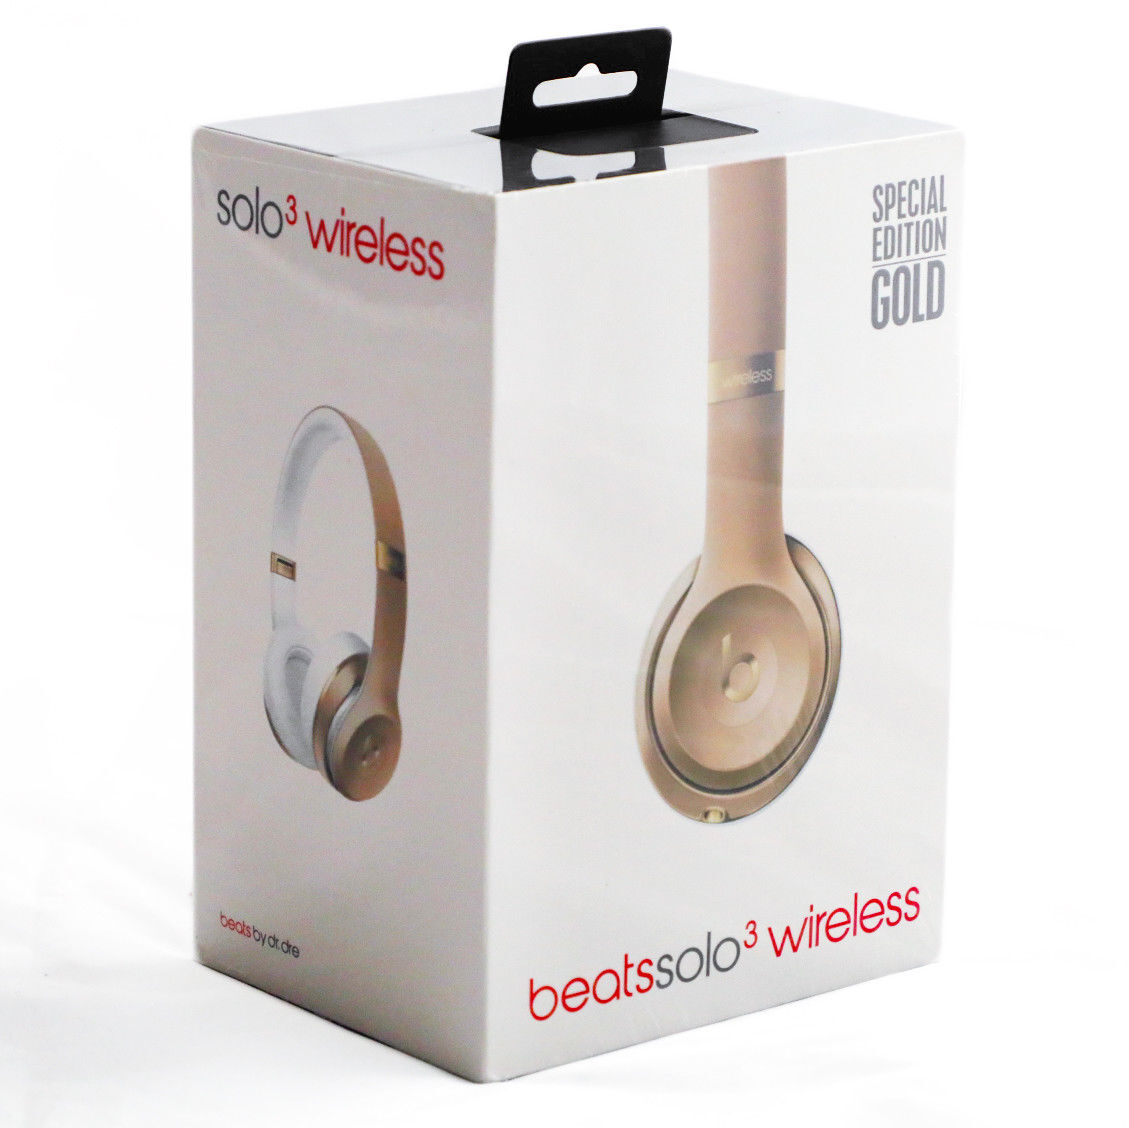 Tai nghe - Headphone Beats Solo 3 Wireless